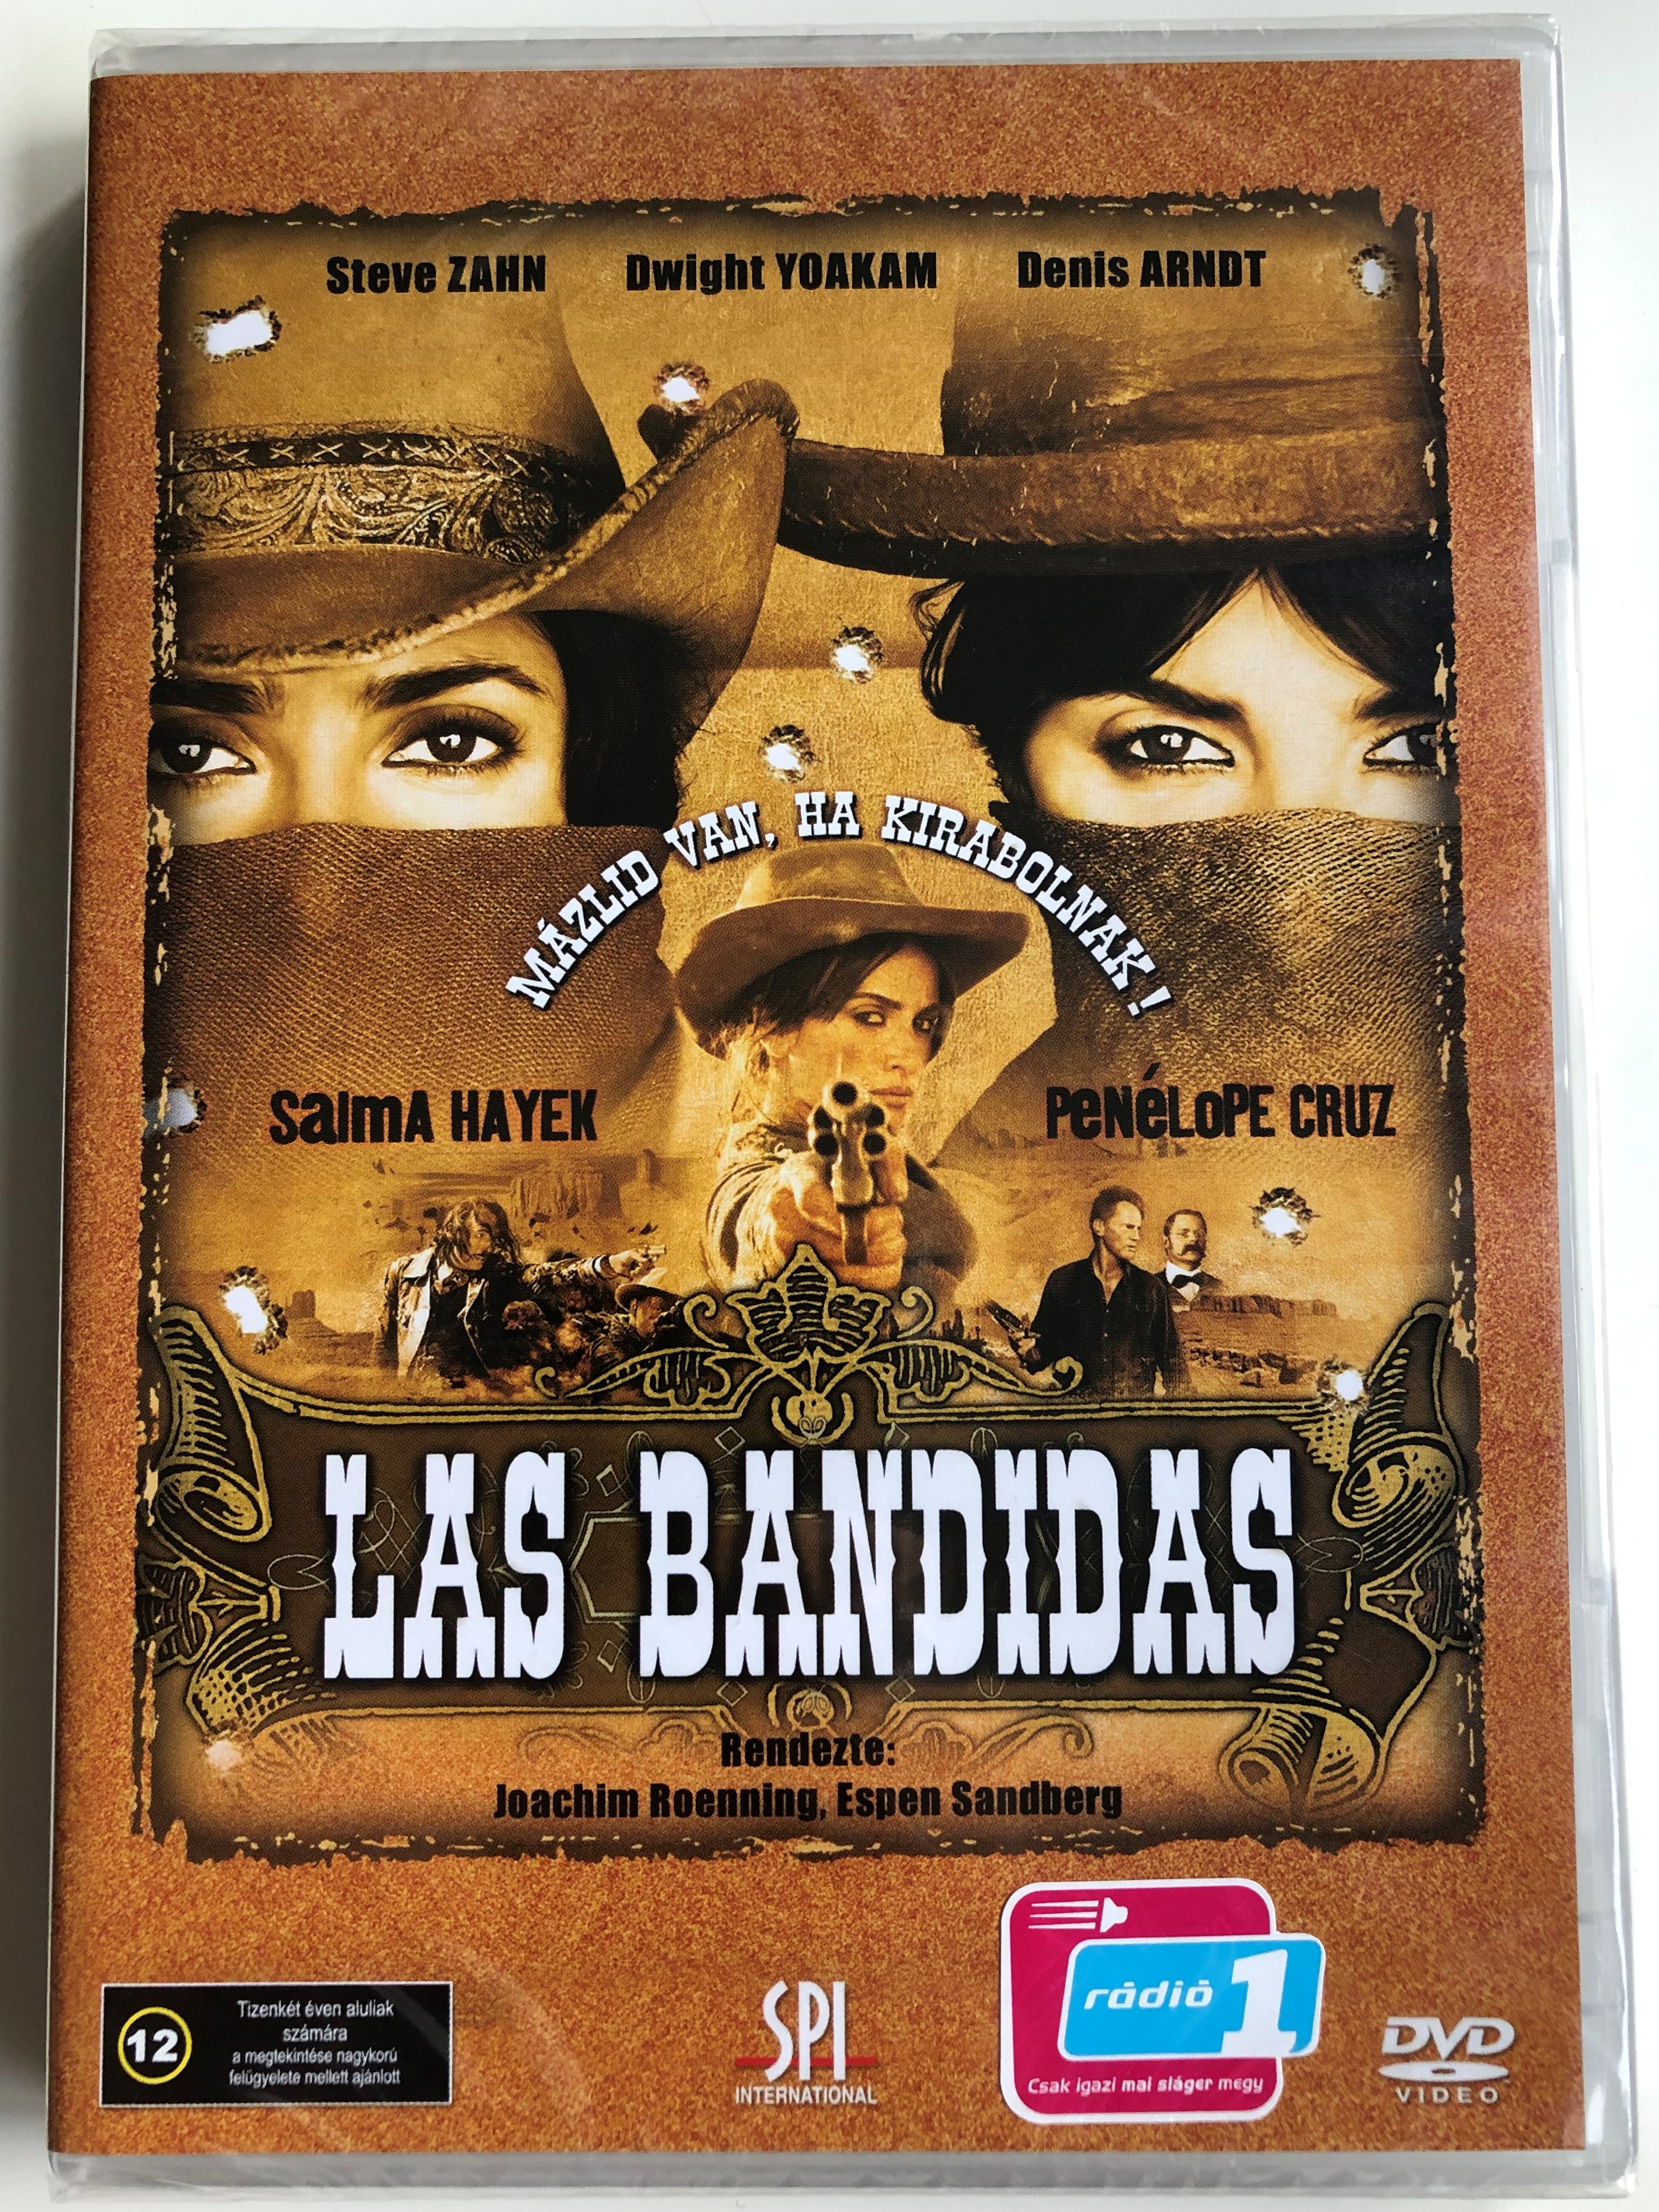 Bandidas DVD 2006 Las Bandidas / Directed by Joachim Rønning, Espen  Sandberg / Starring: Salma Hayek, Penélope Cruz, Steve Zahn, Sam Shepard,  Dwight Yoakam - Bible in My Language